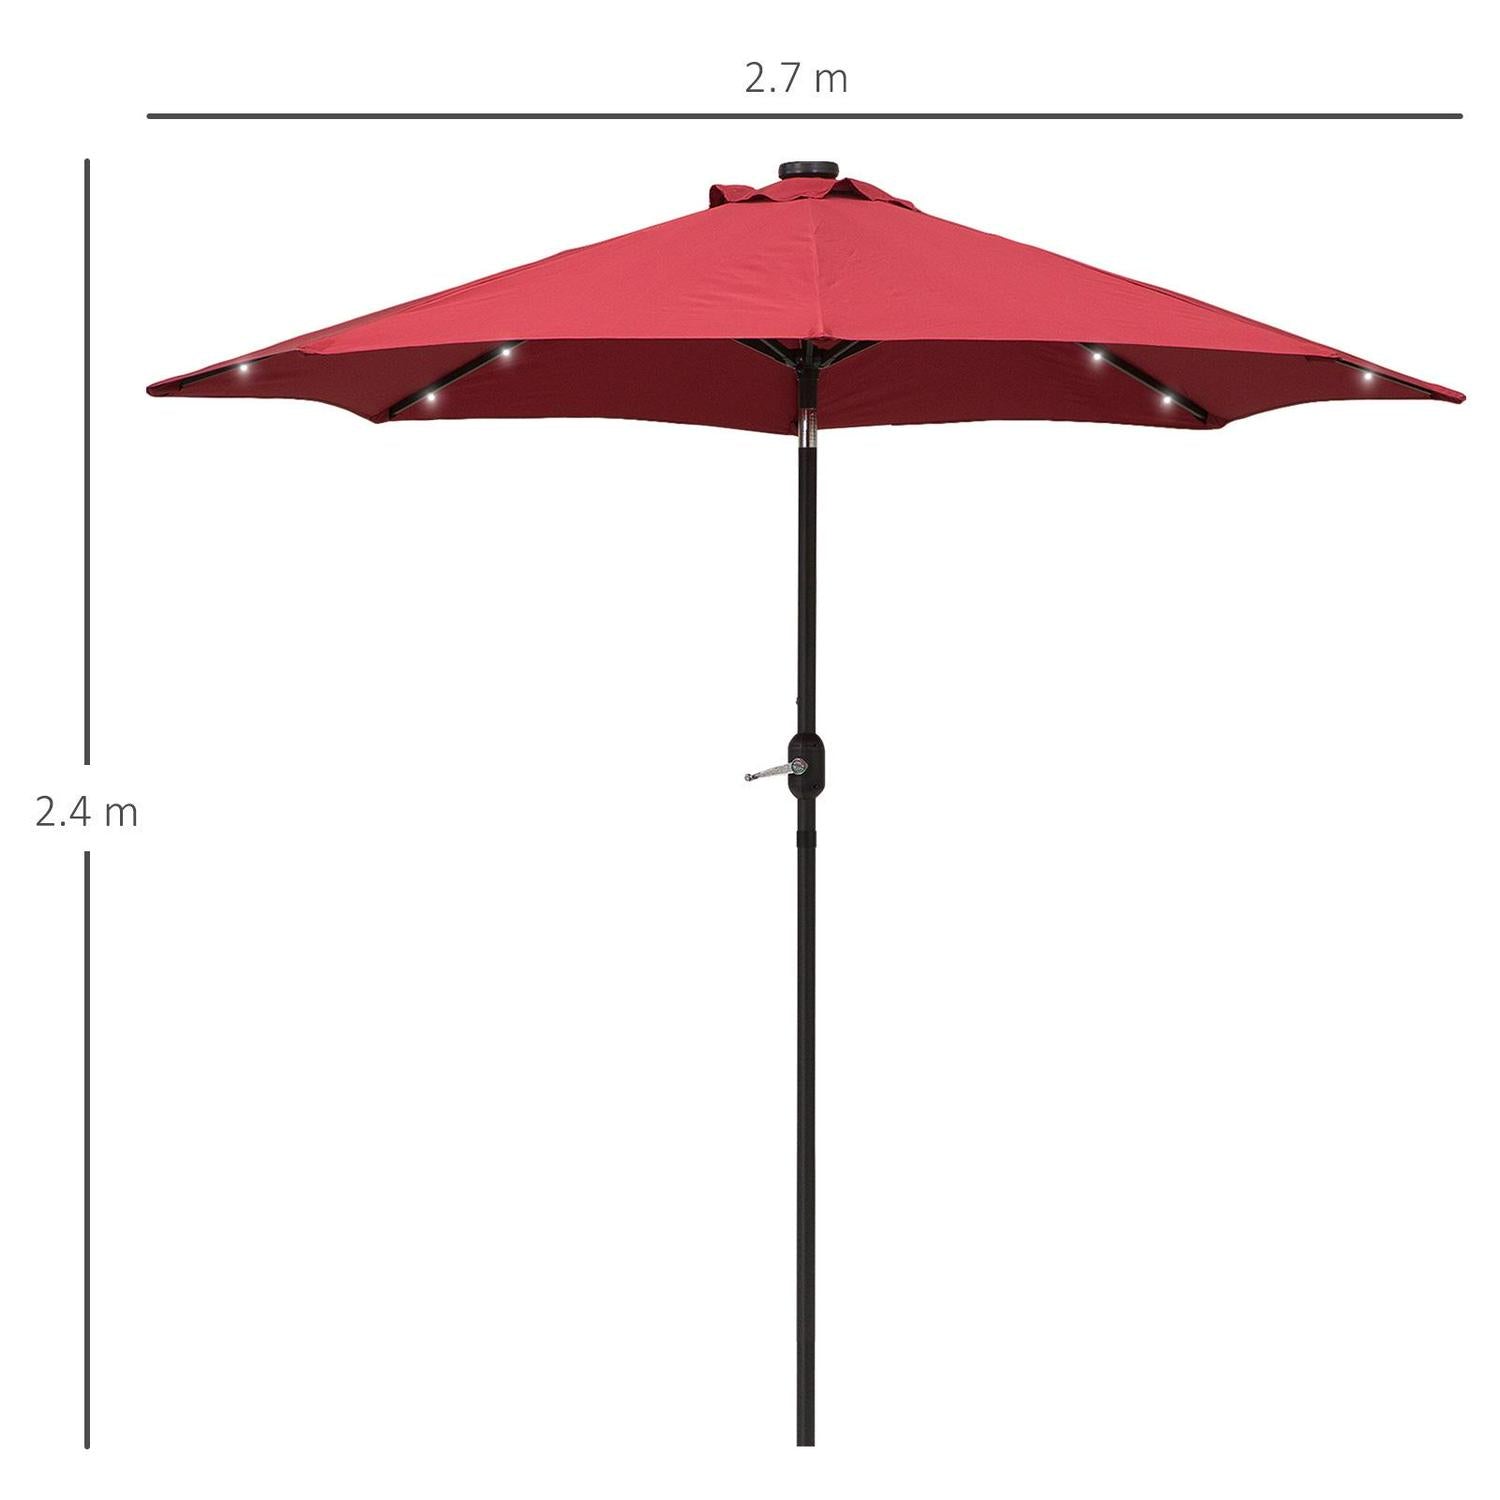 24 LED Solar Powered Parasol Umbrella-Wine Red